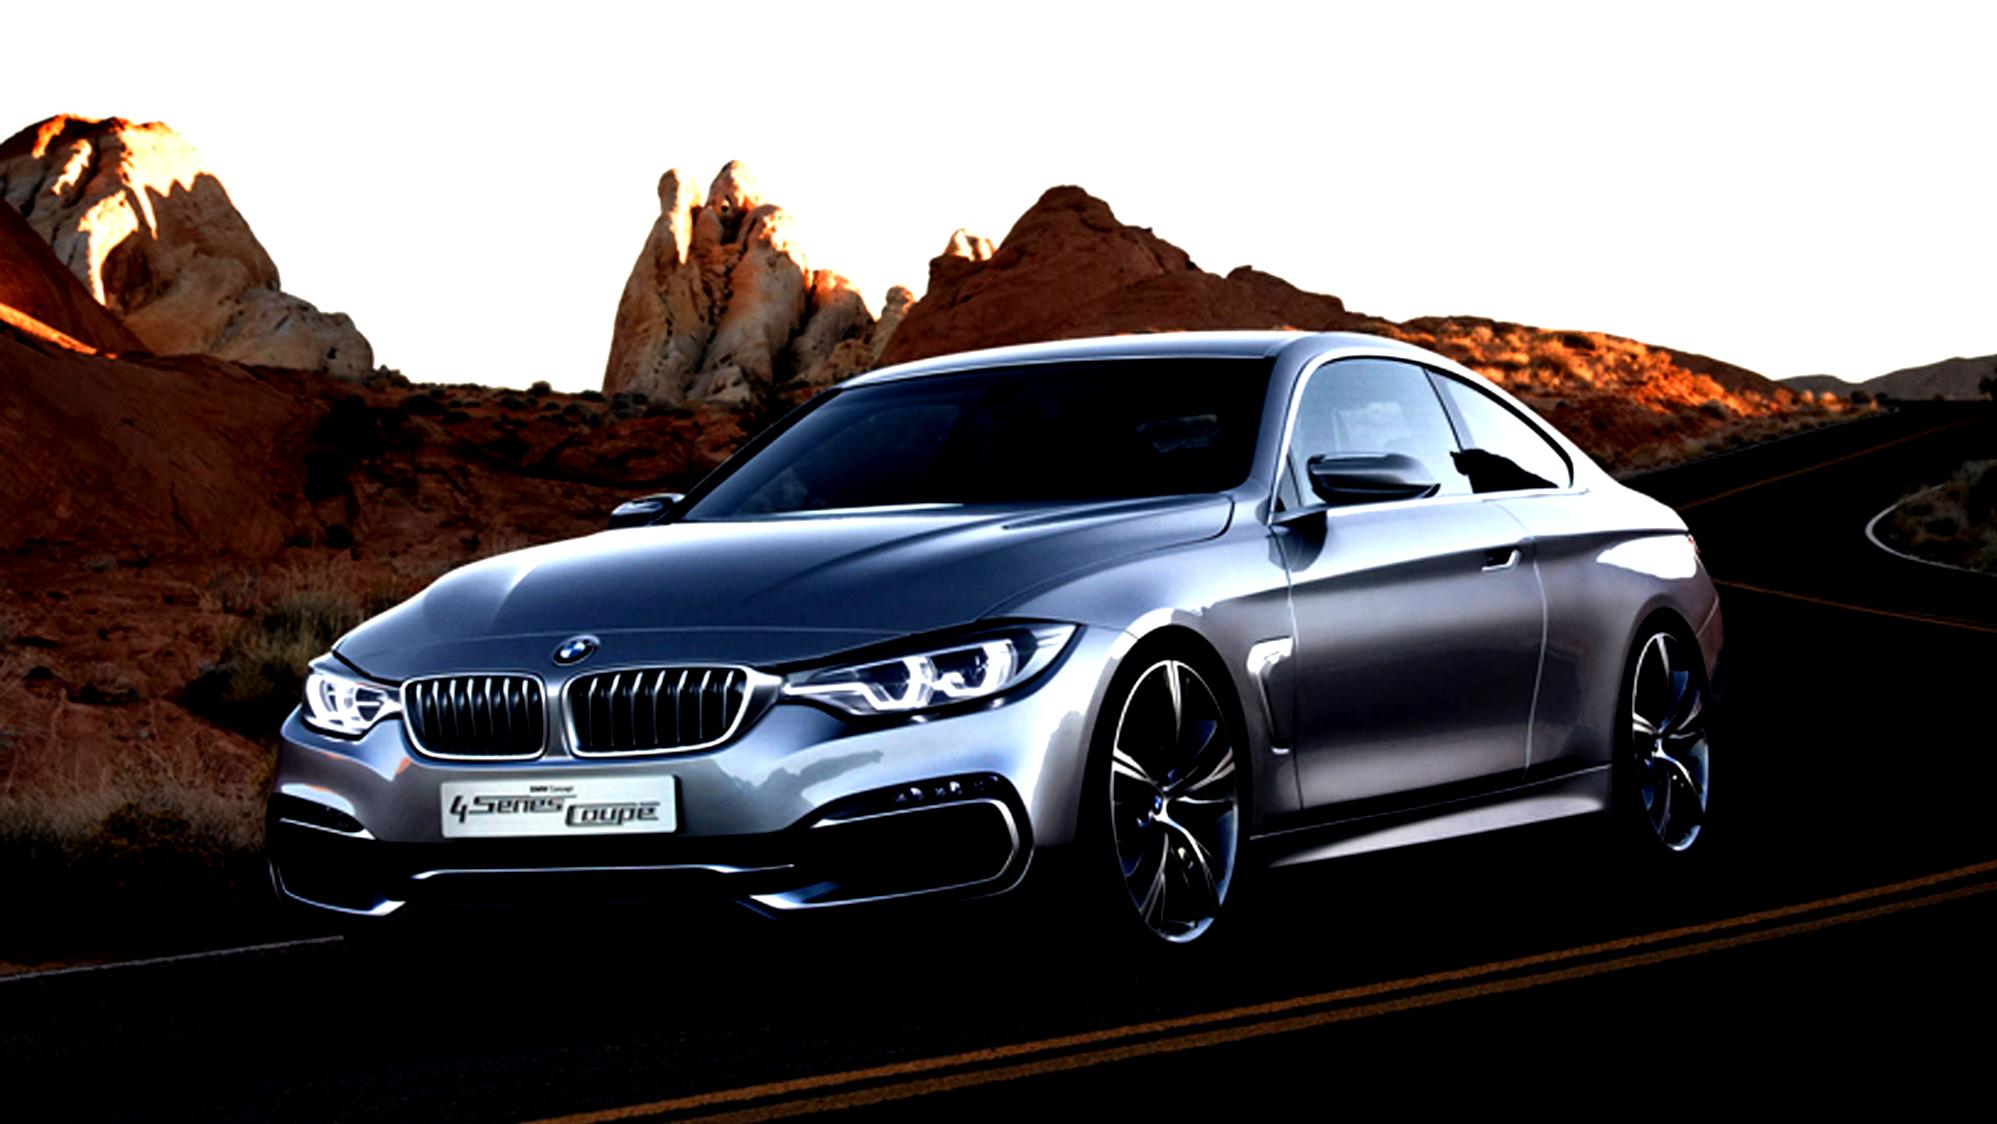 BMW 4 Series 2013 #1